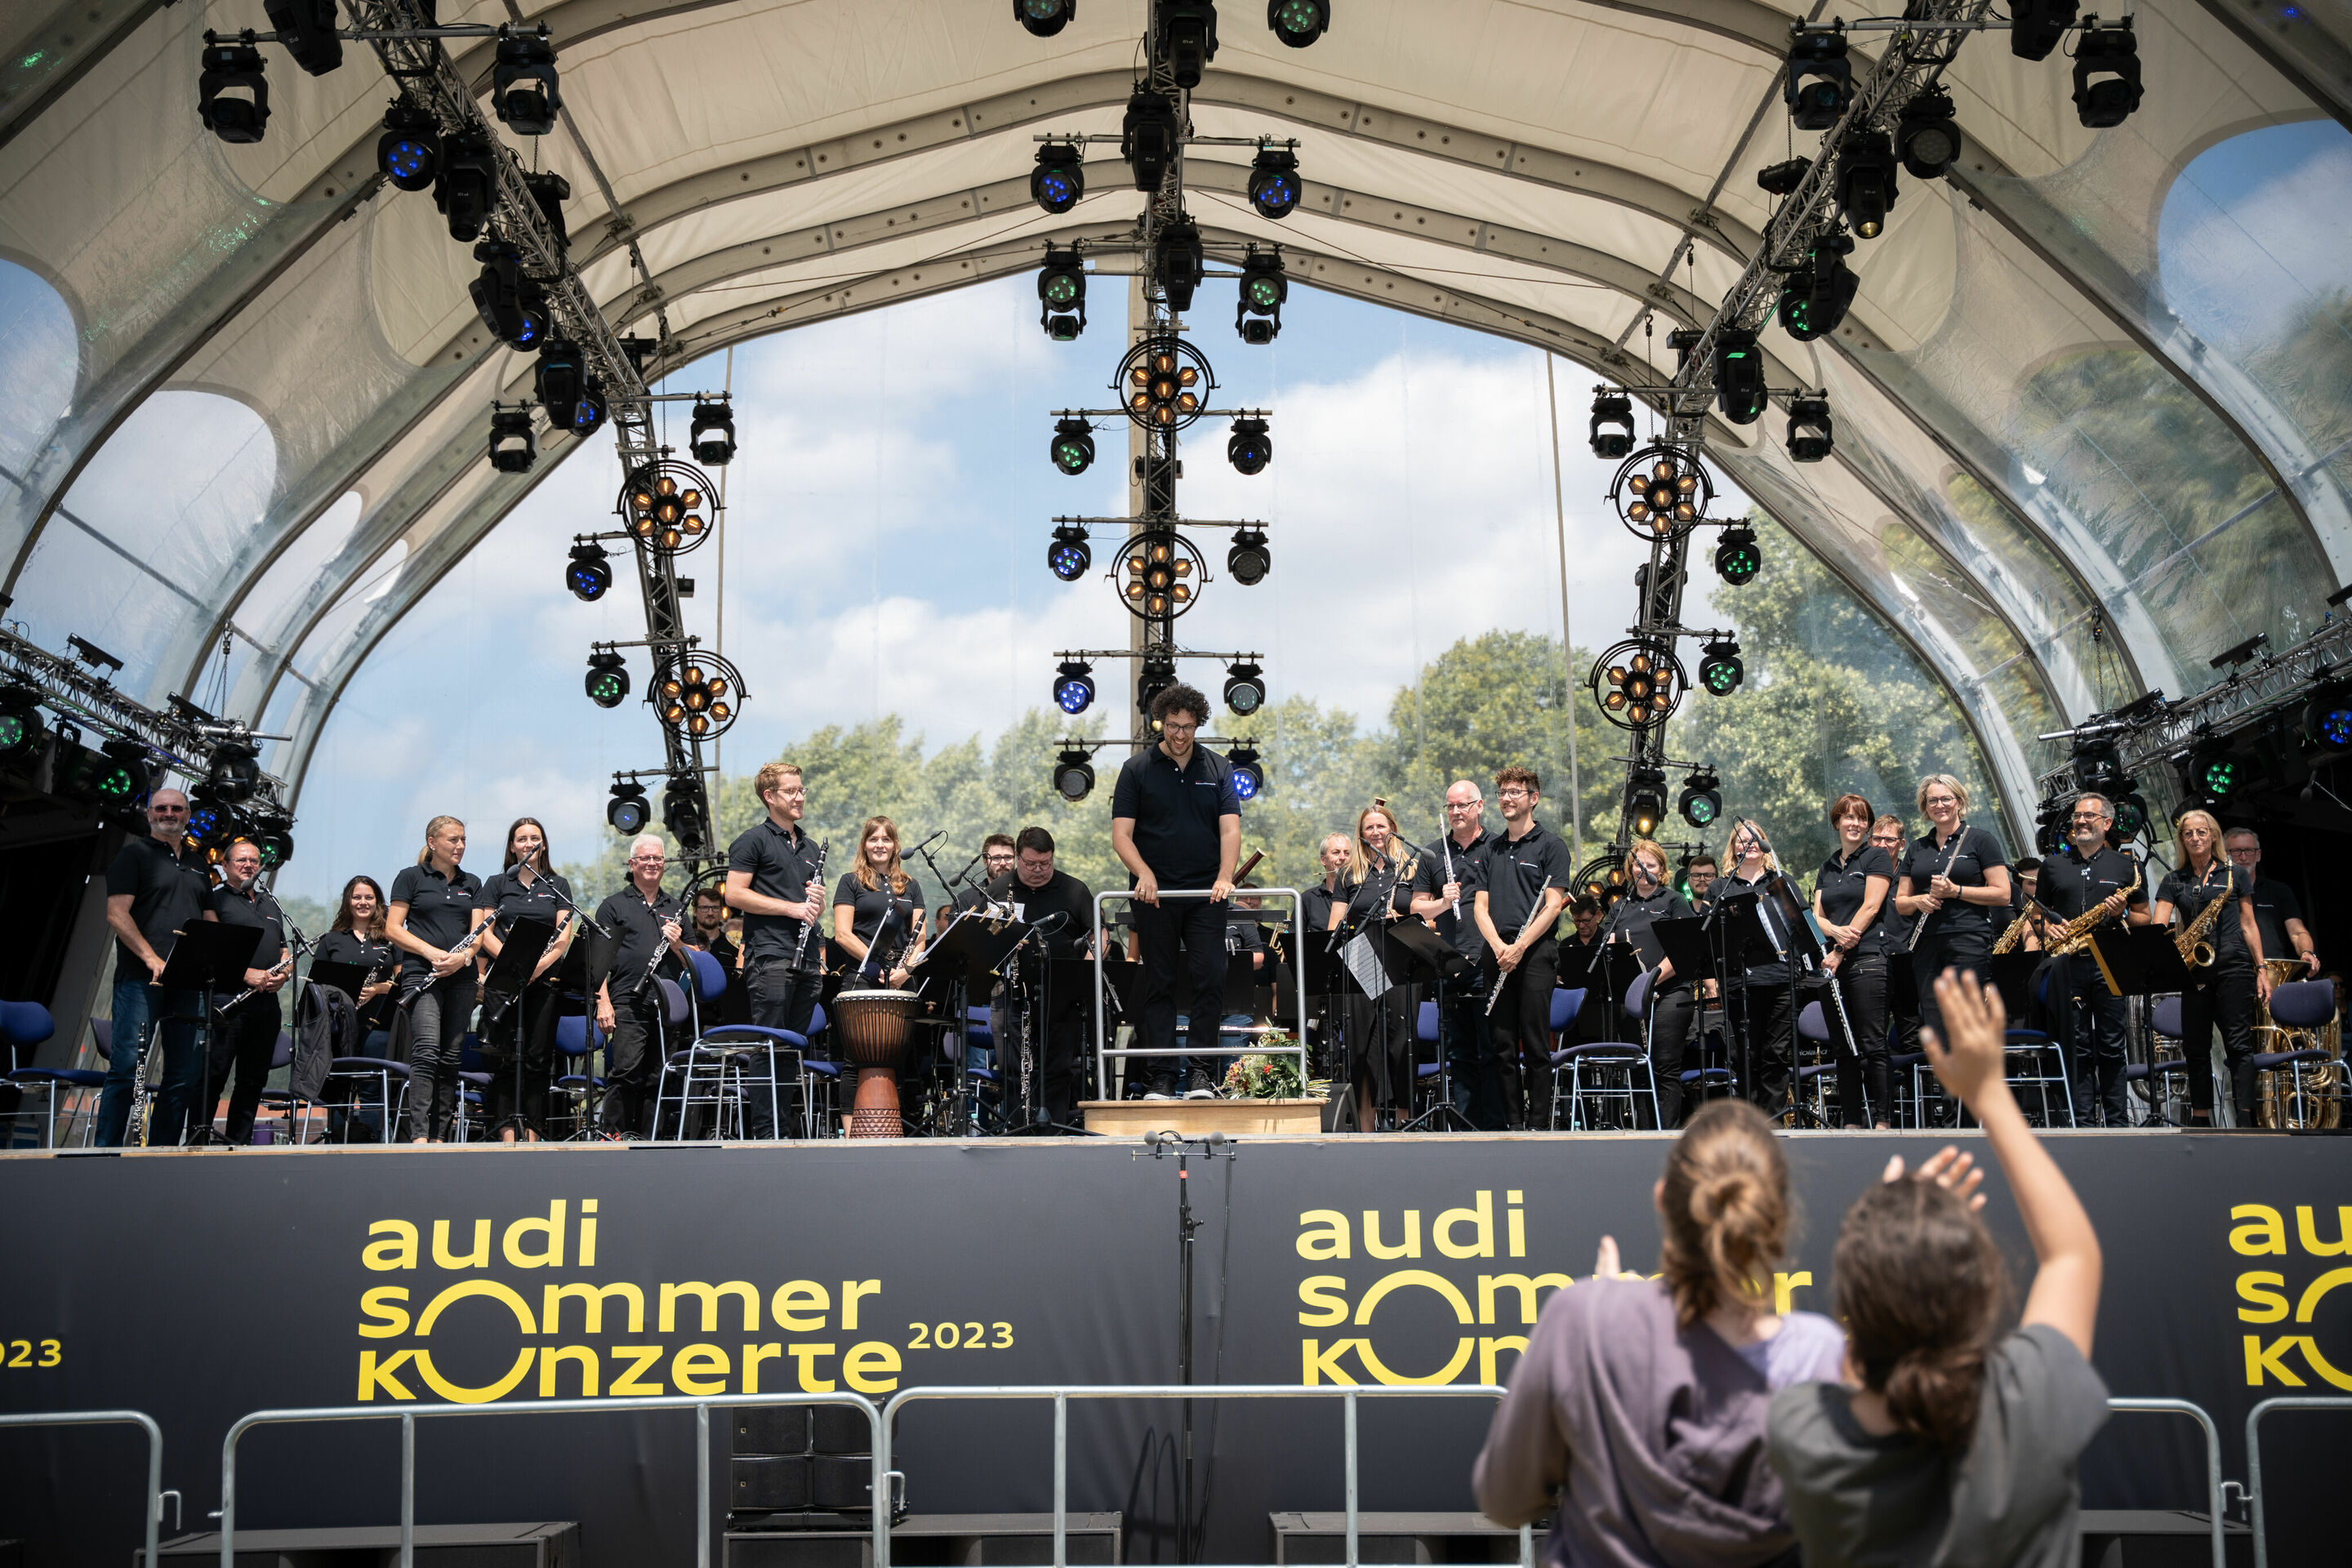 Audi Sommerkonzerte 2023